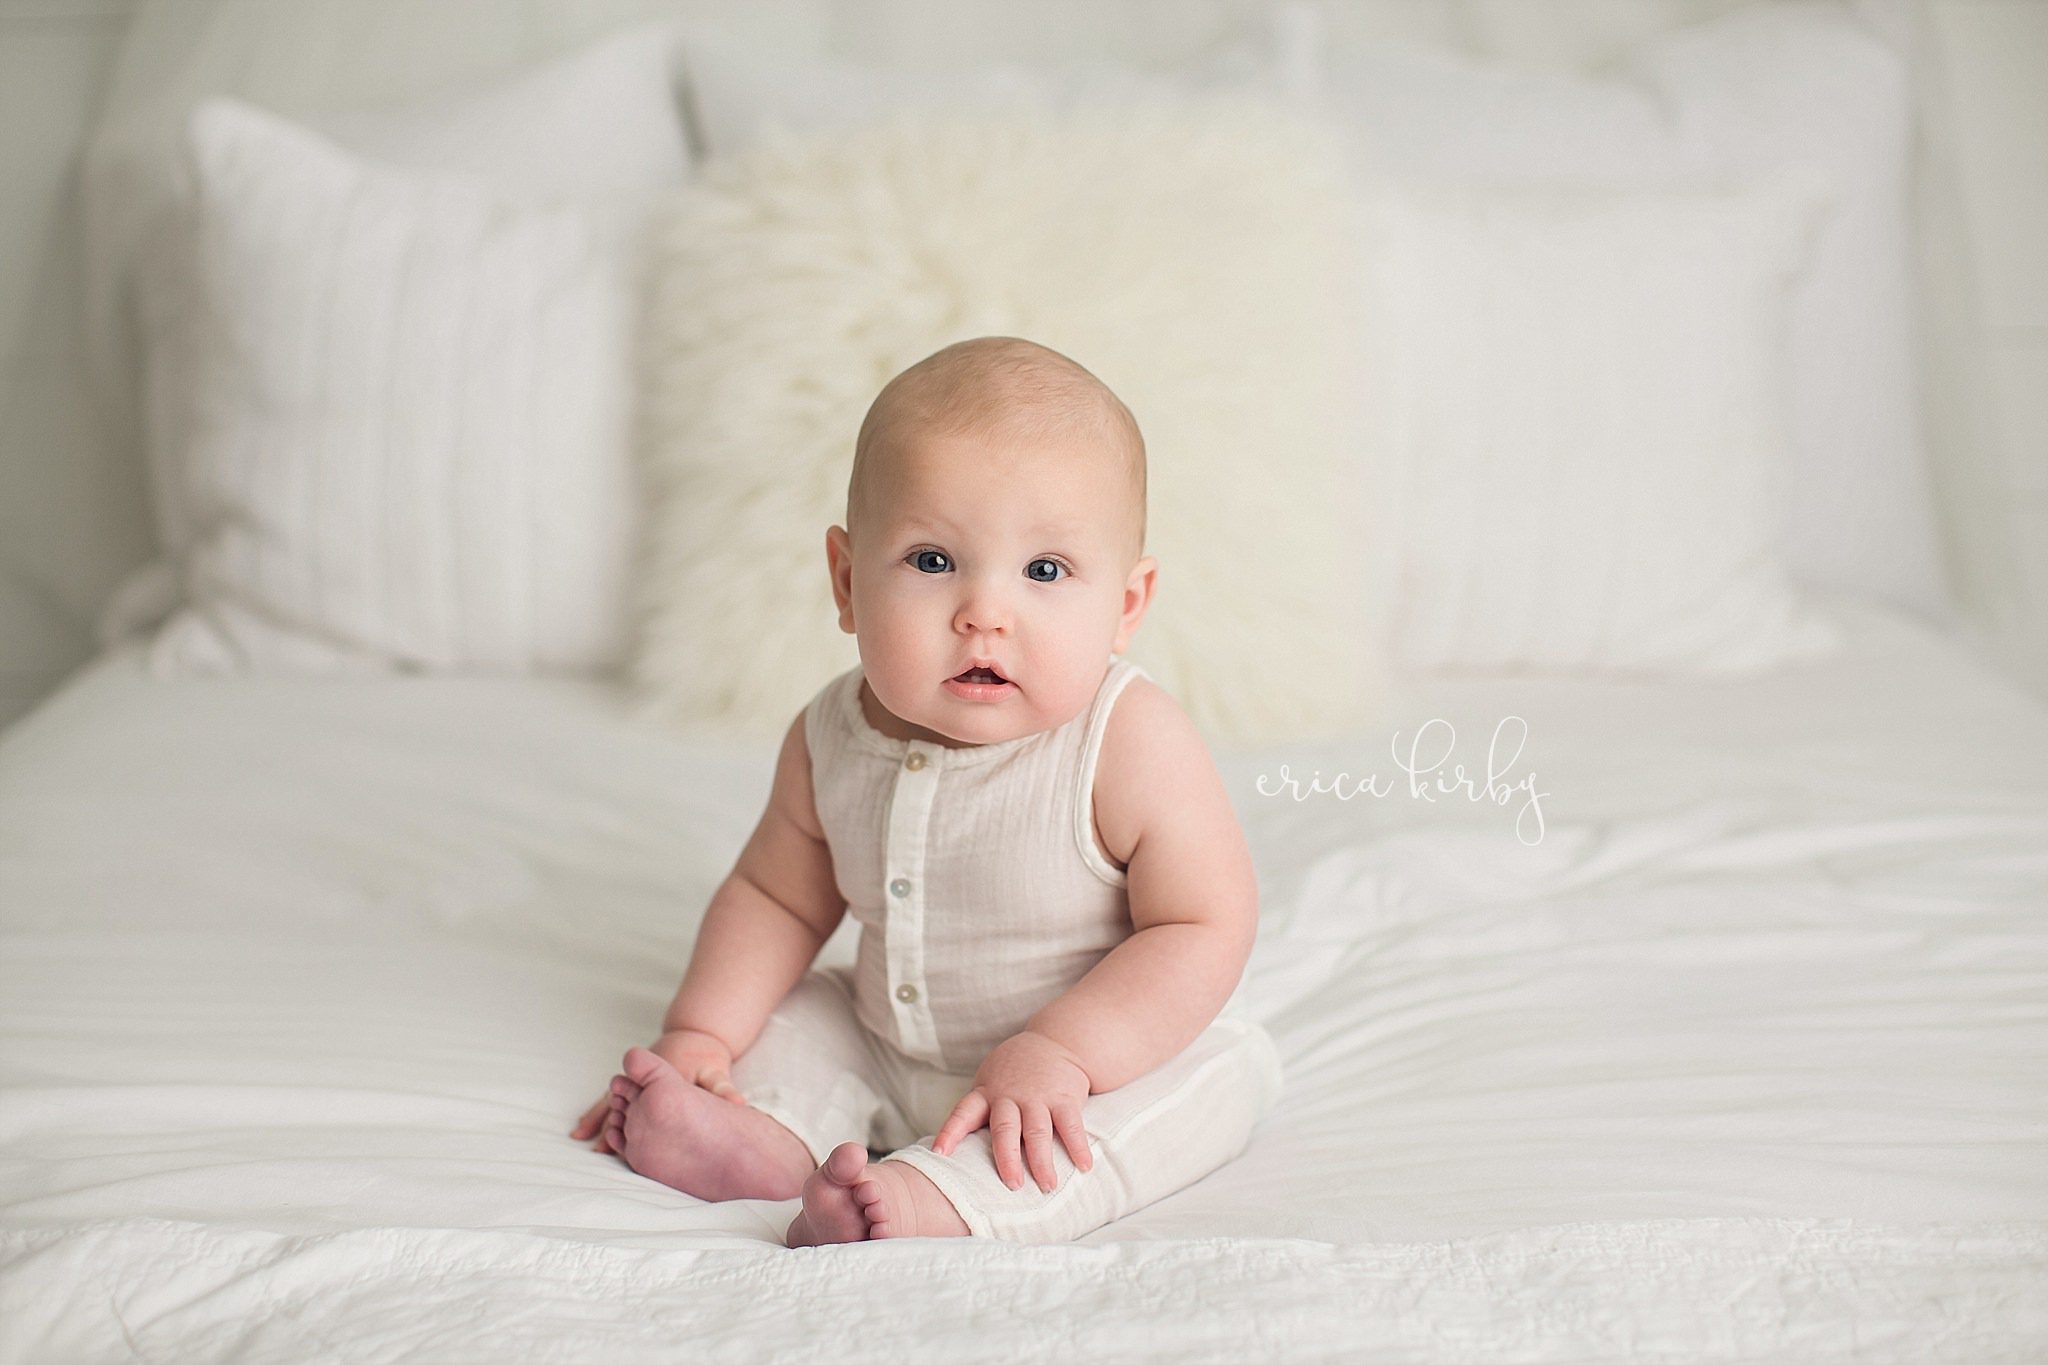 Northwest AR 6 Month Milestone Portraits - Baby photographer bentonville rogers fayetteville ar - erica kirby 